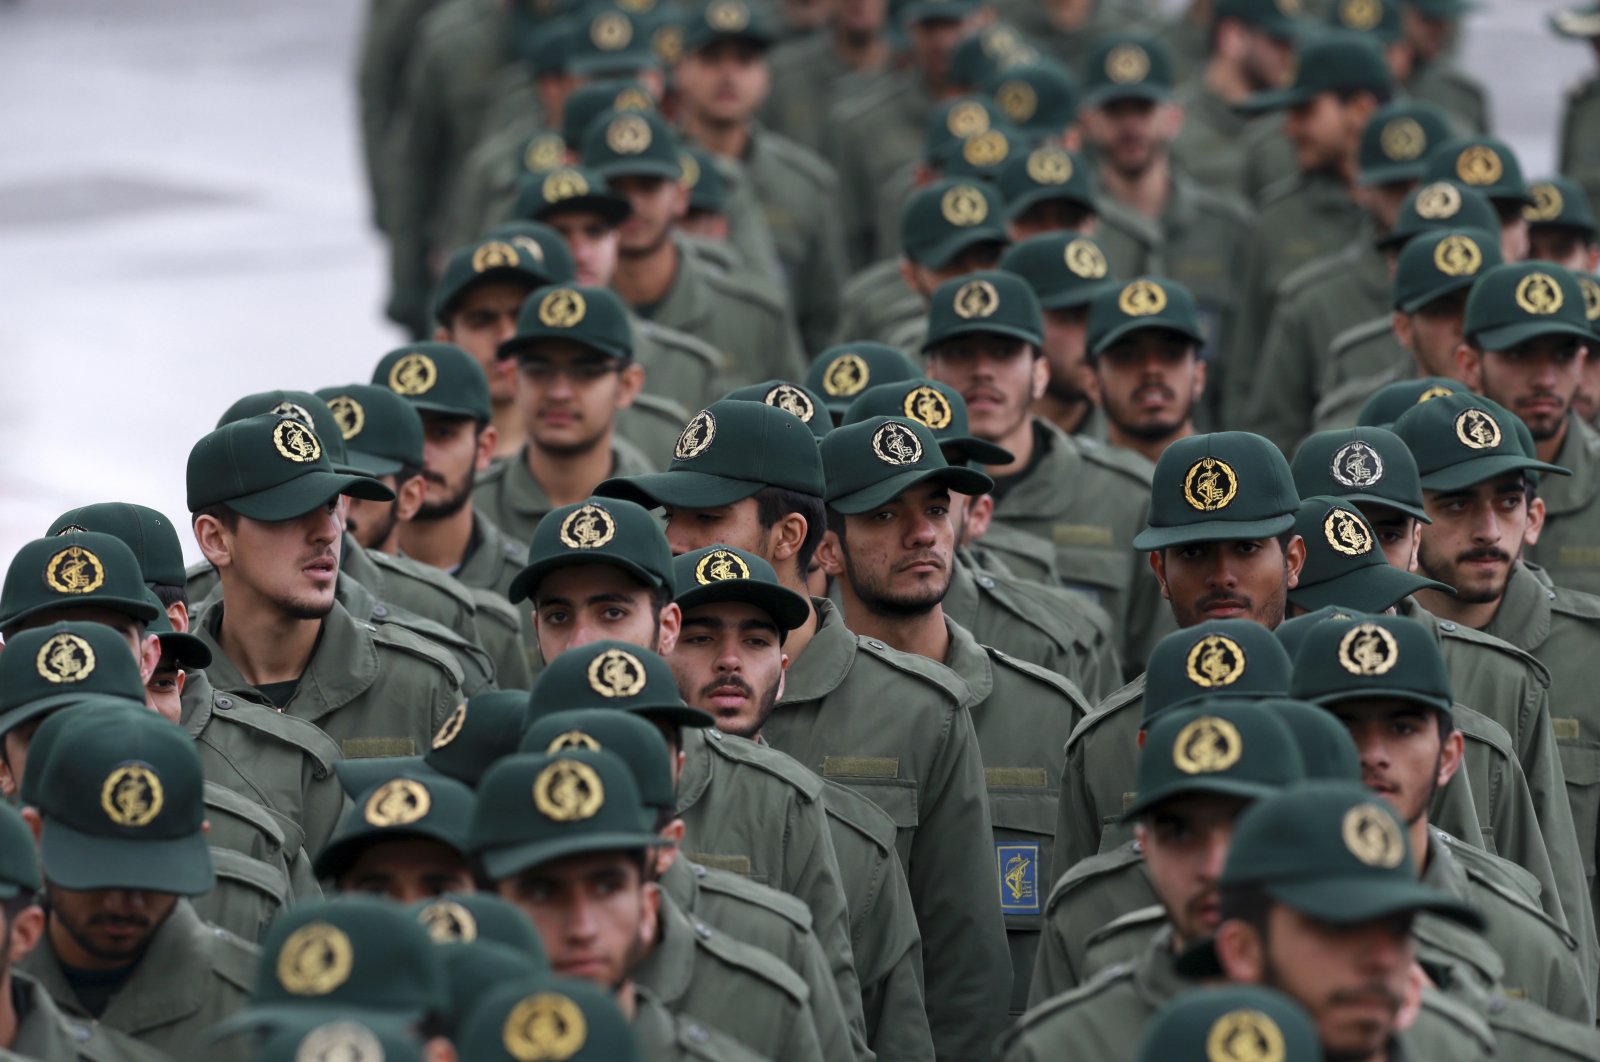 Iranian Revolutionary Guard members arrive for a ceremony celebrating the 40th anniversary of the Islamic Revolution, in Tehran, Iran, Feb. 11, 2019. (AP Photo)